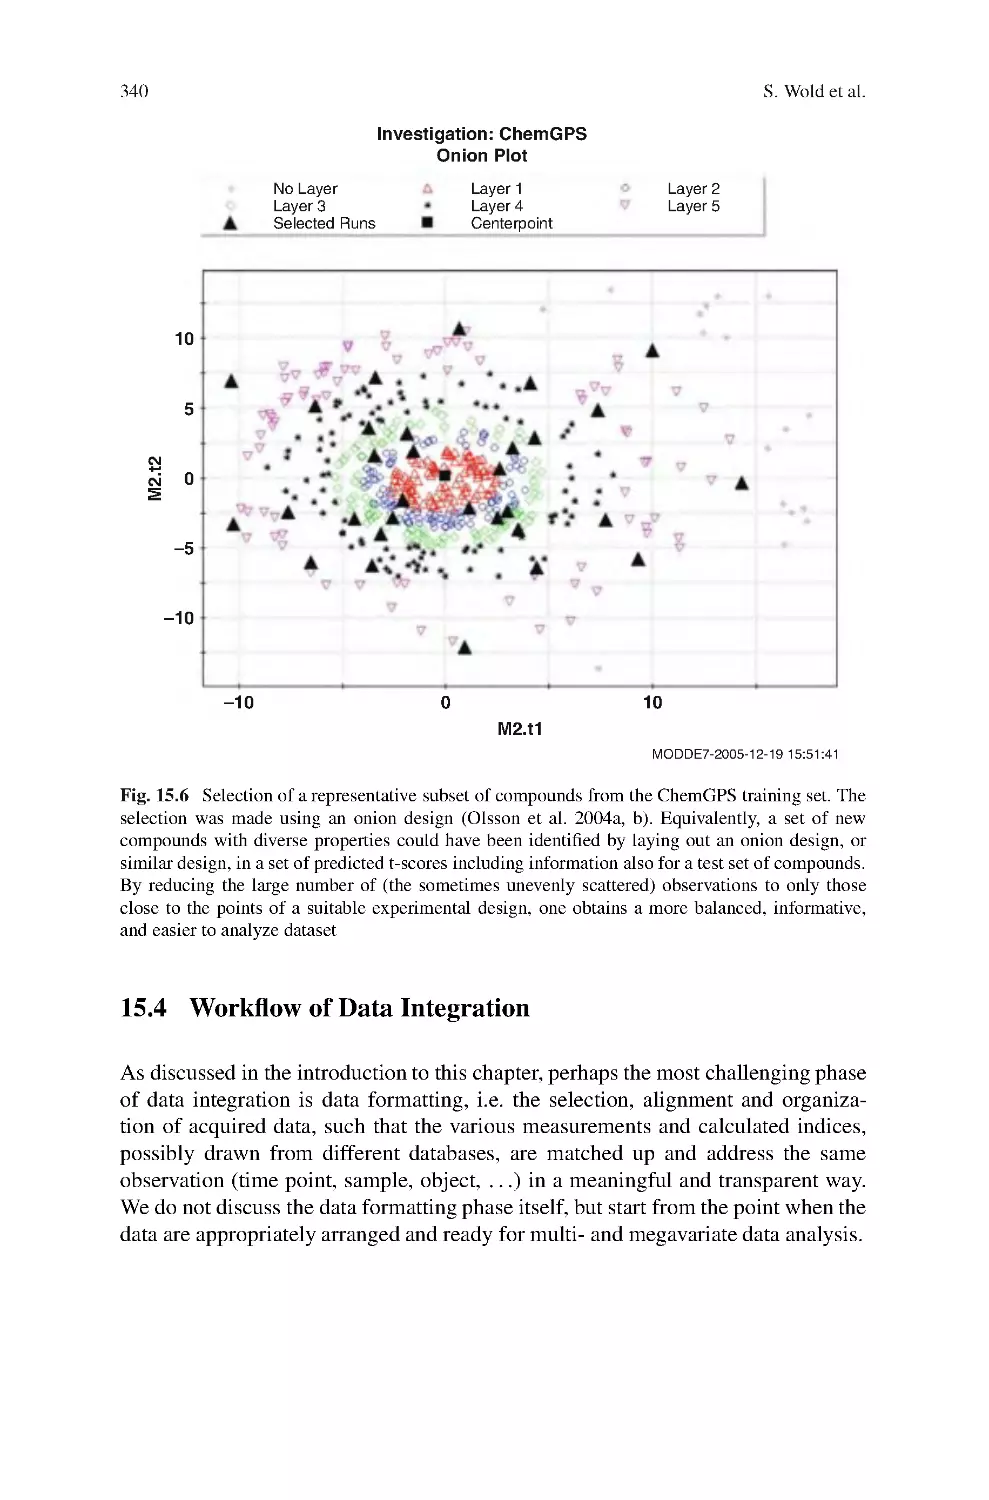 15.4 Workflow of Data Integration